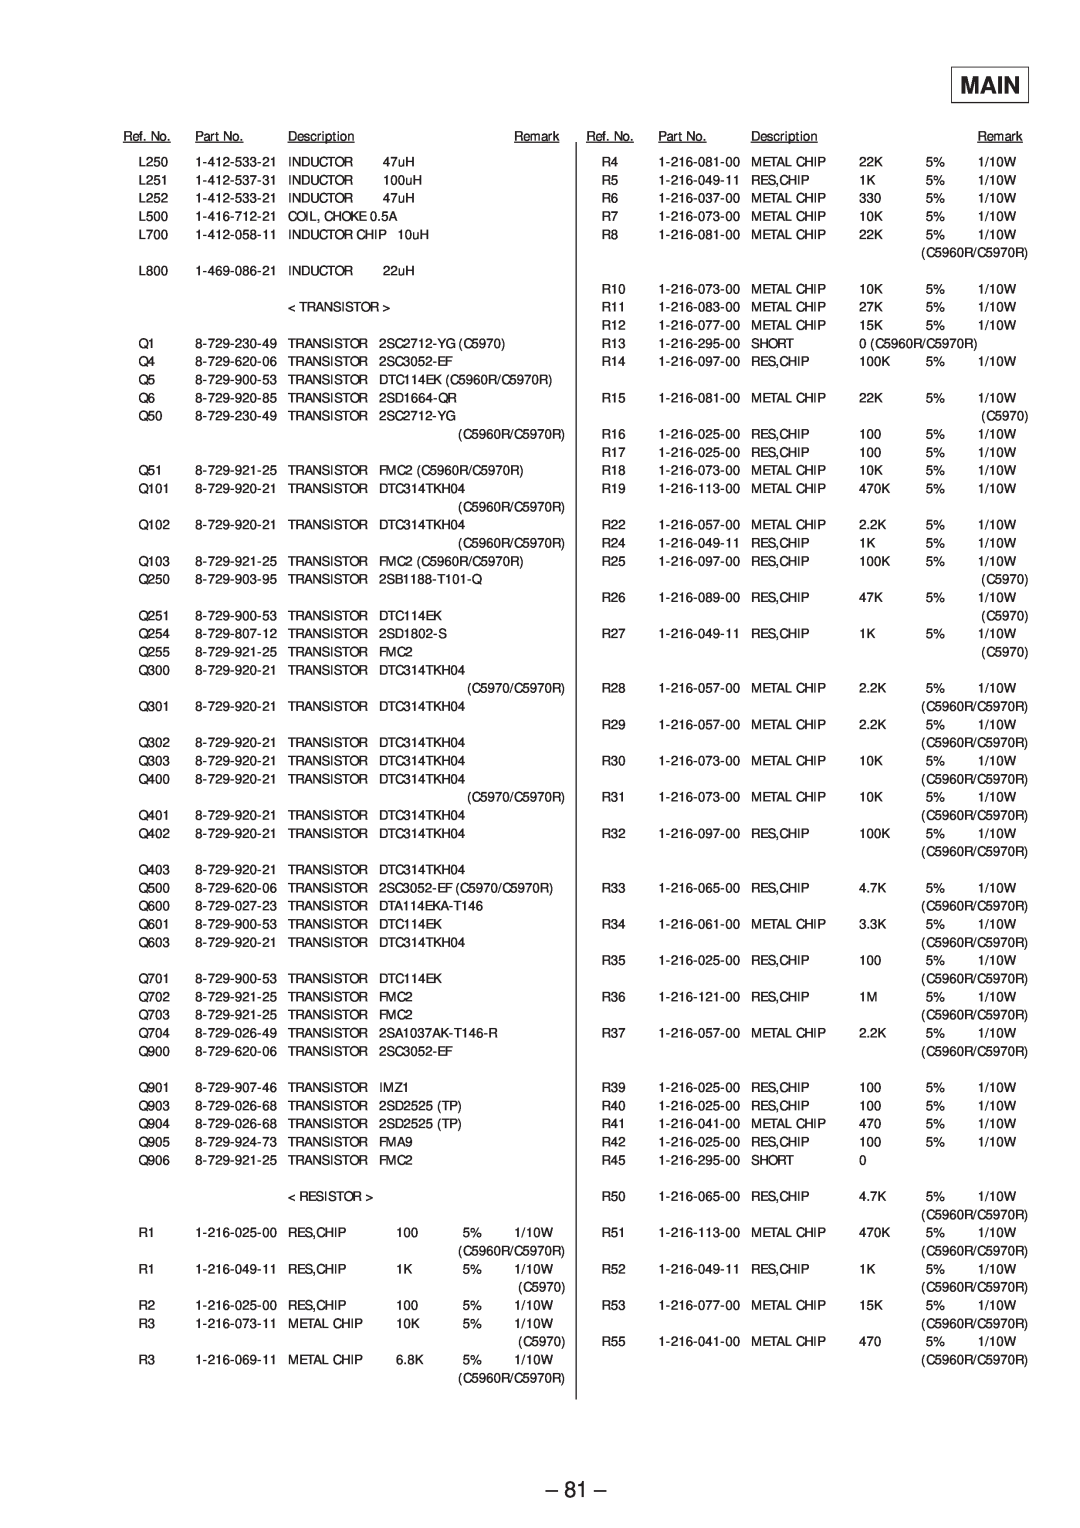 Sony MDX-C5970R service manual 81, Main 